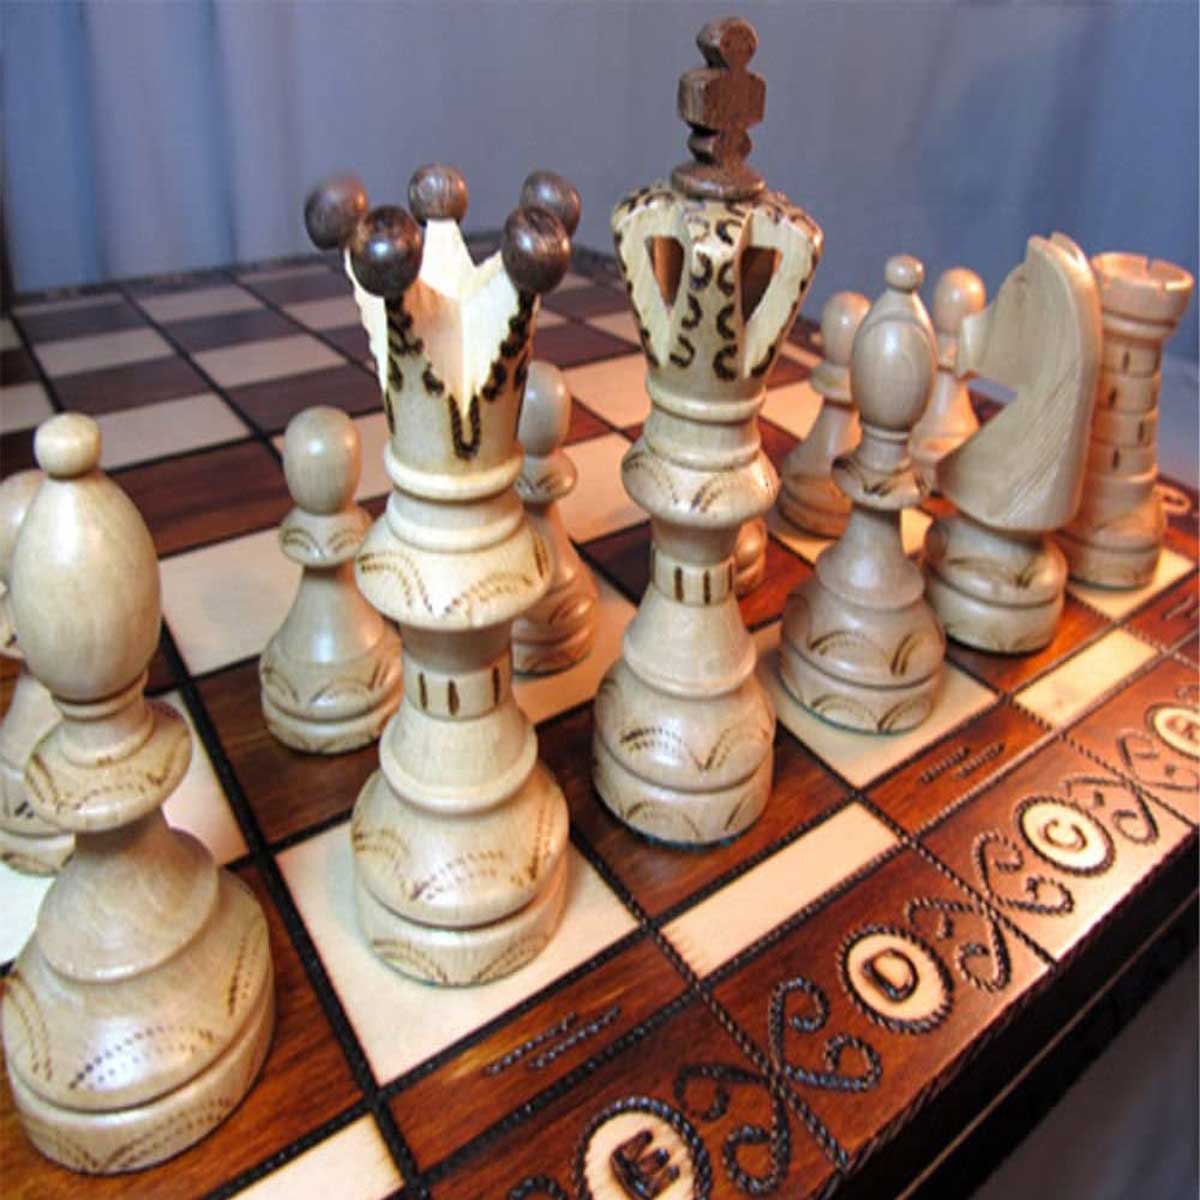 Maxim blokh manual de ajedrez